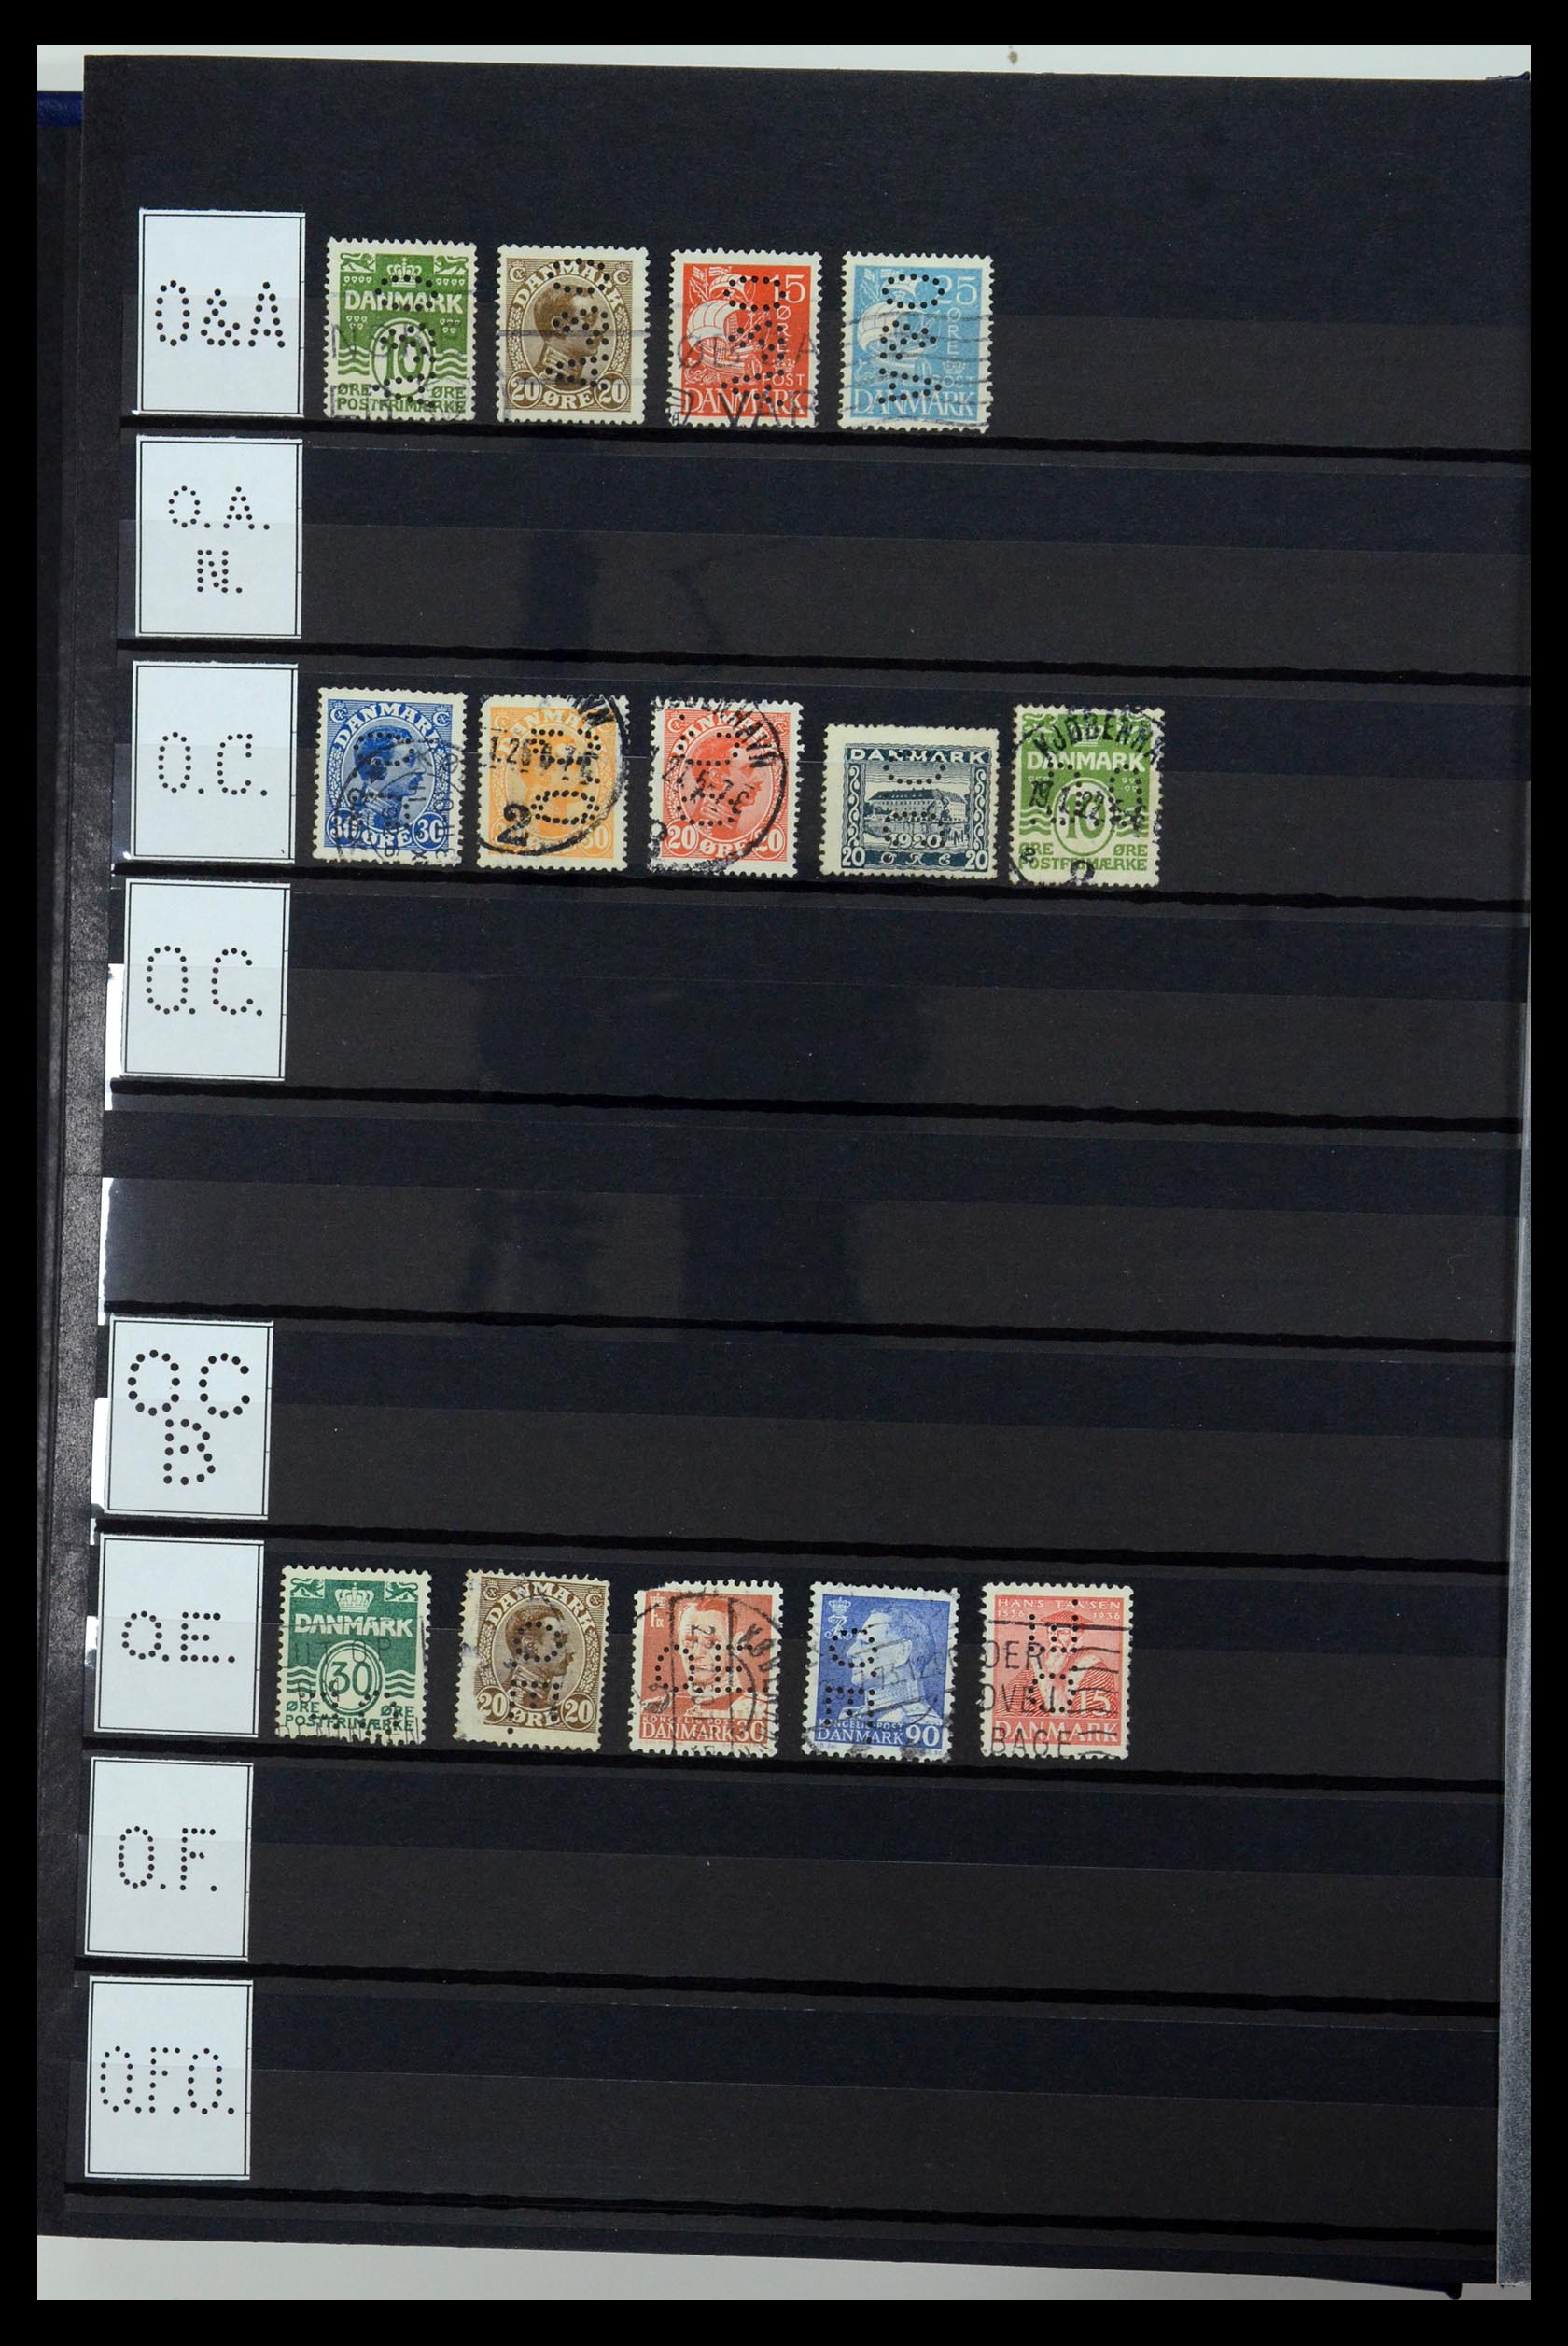 36396 185 - Stamp collection 36396 Denmark perfins.